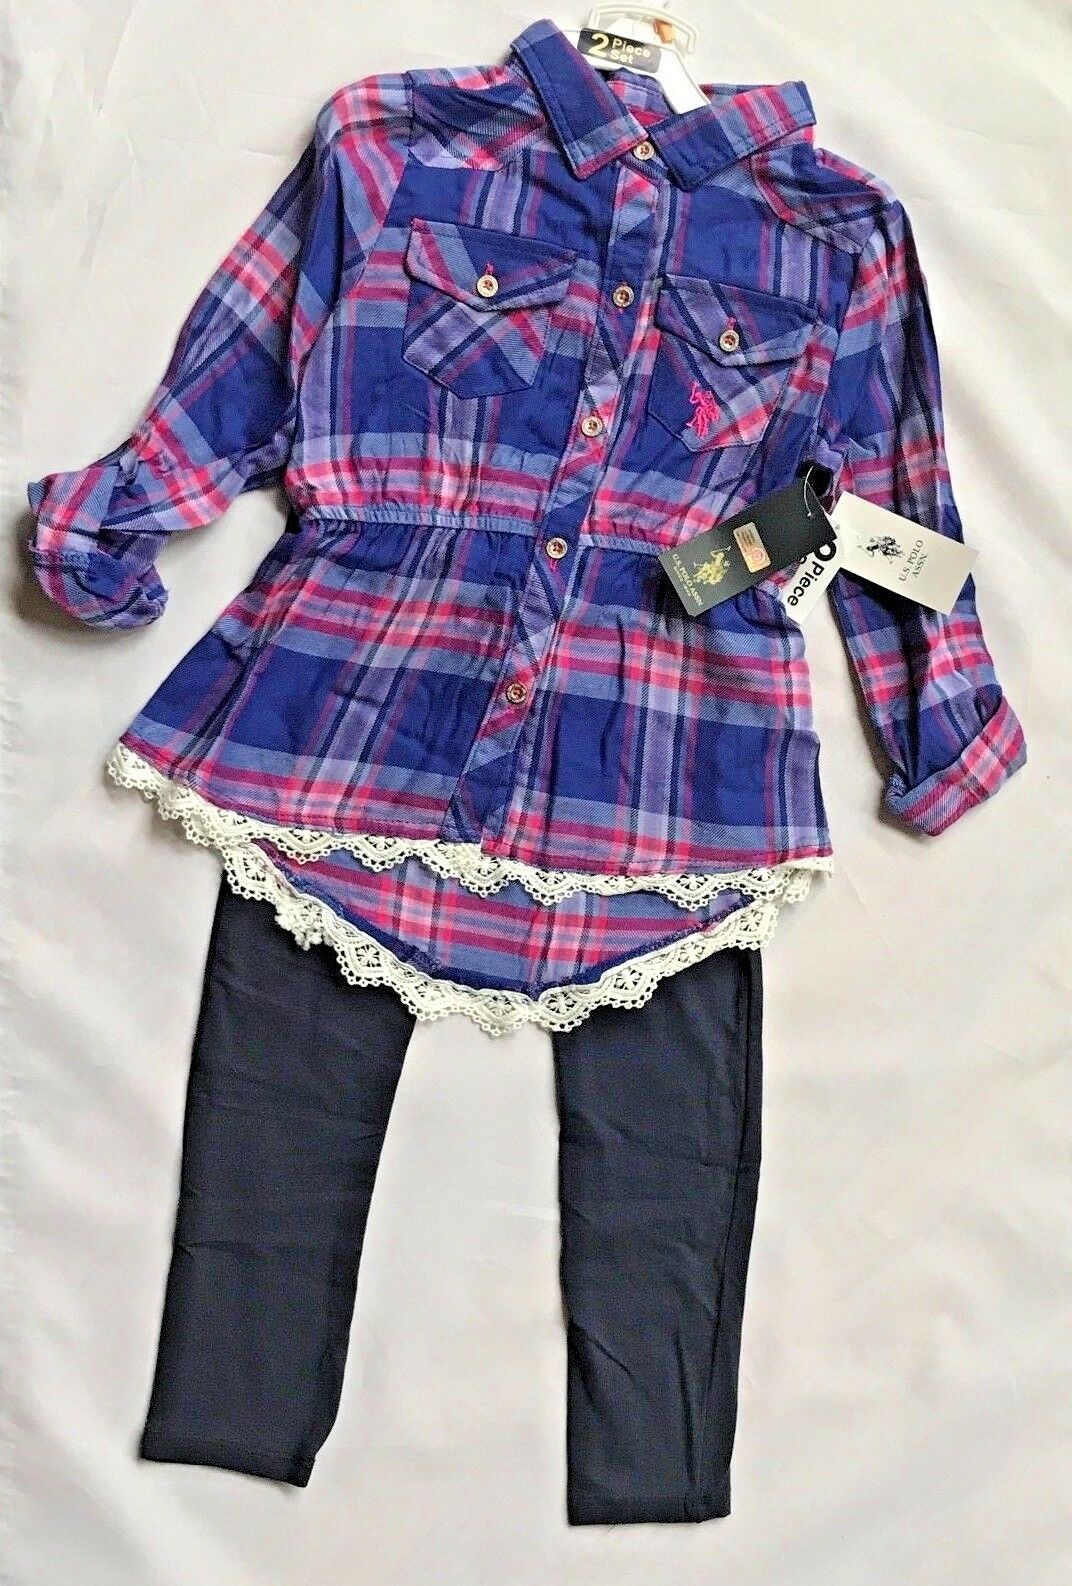 Nwt Us Polo Assn. Girls' Fashion Top And Leggings 2 Piece Set Purple/pink Plaid